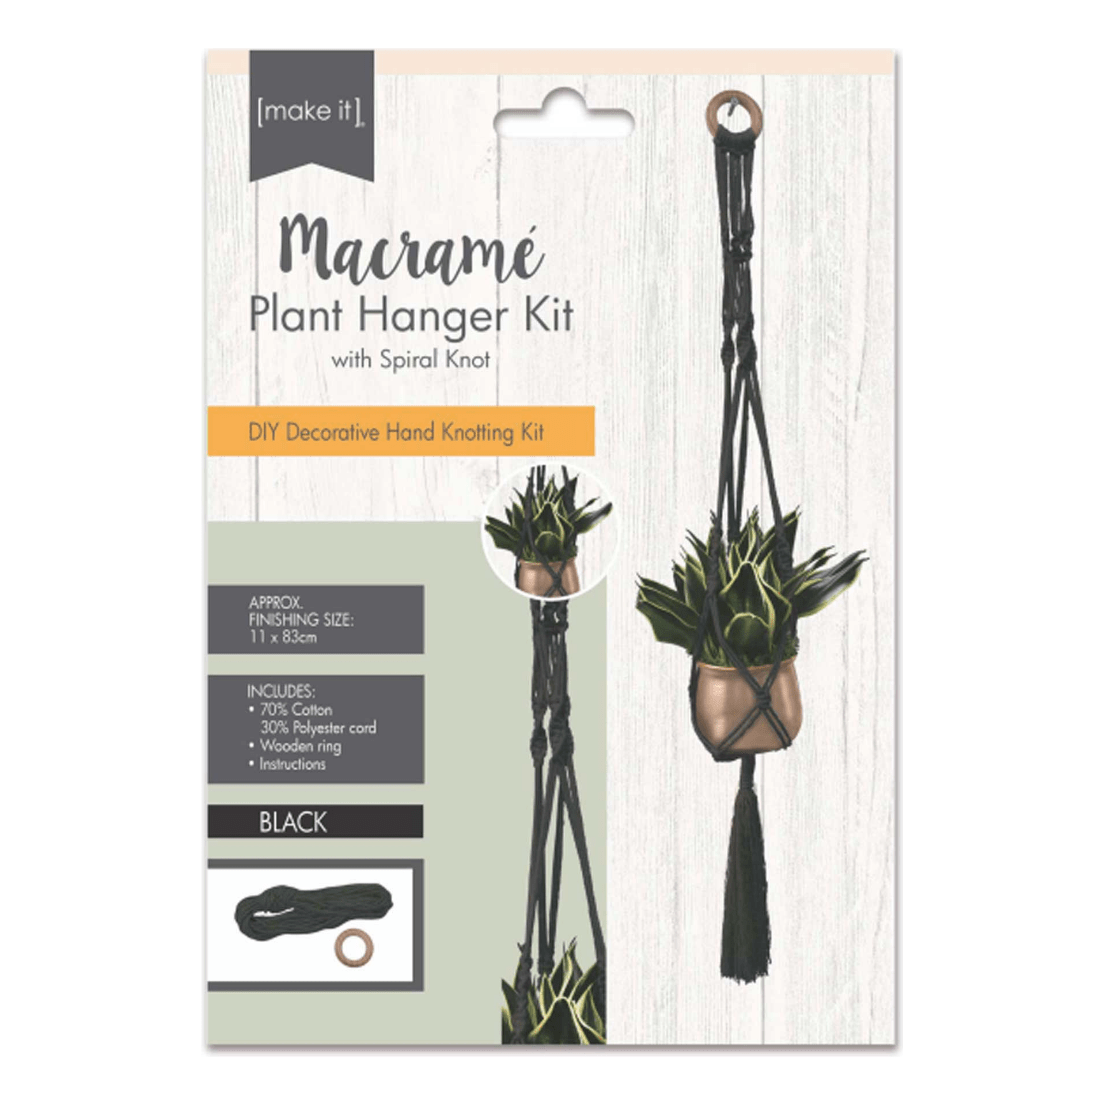 Macrame Plant Hanger Kit with Spiral Knot - Black